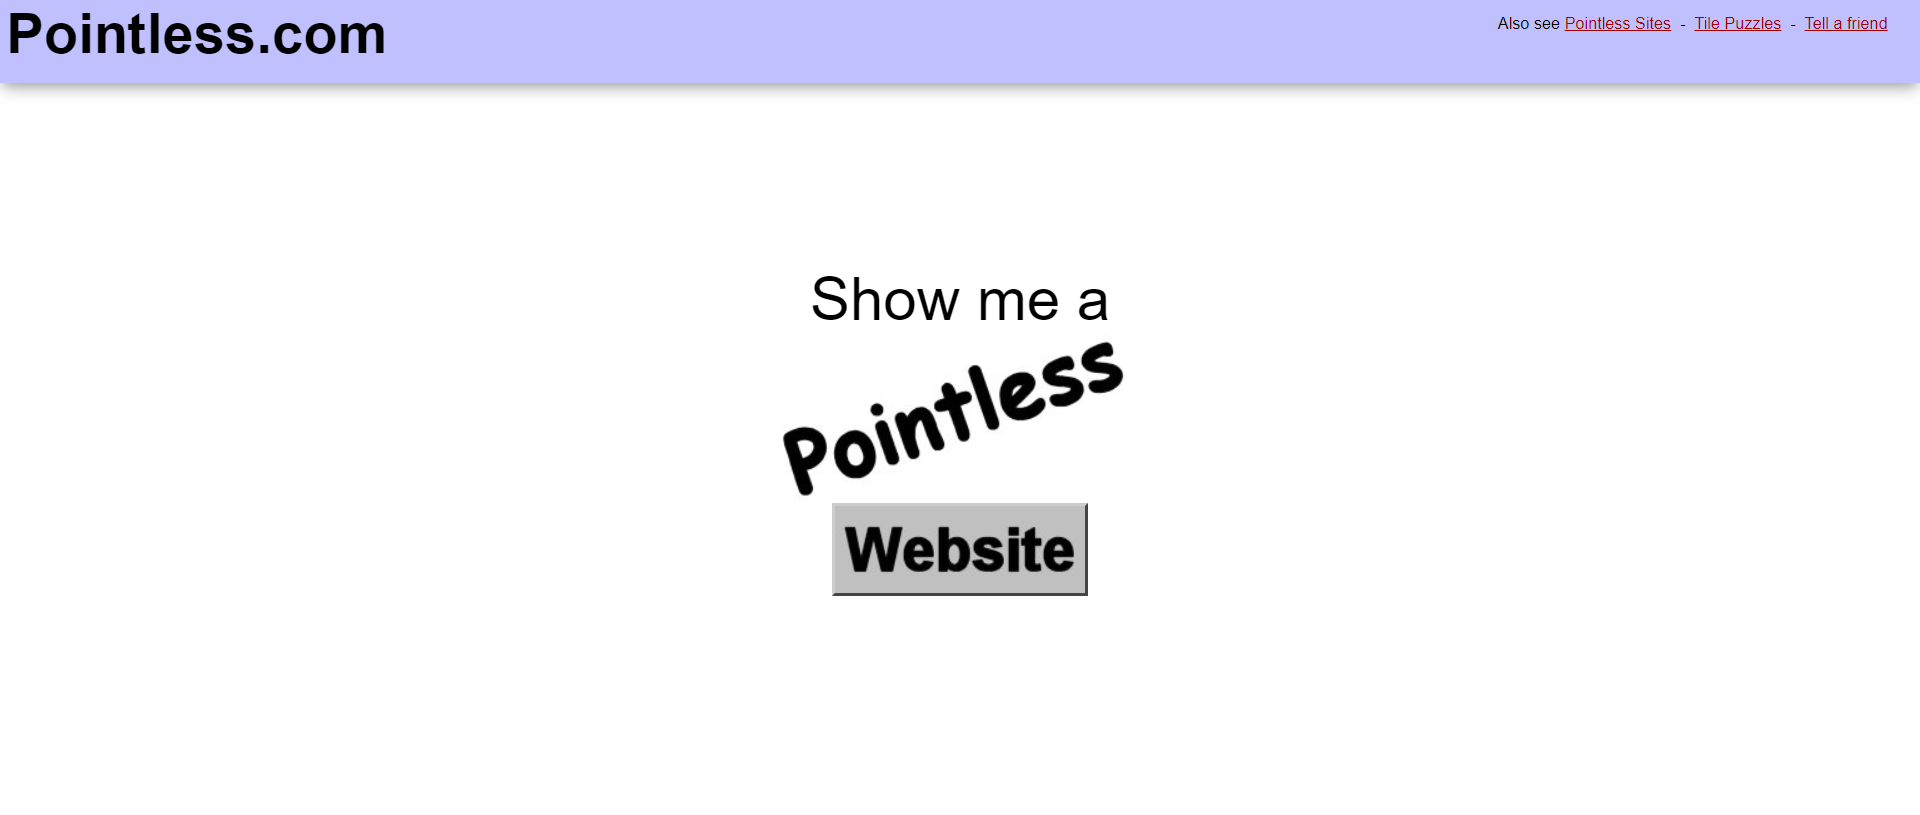 Pointless.com